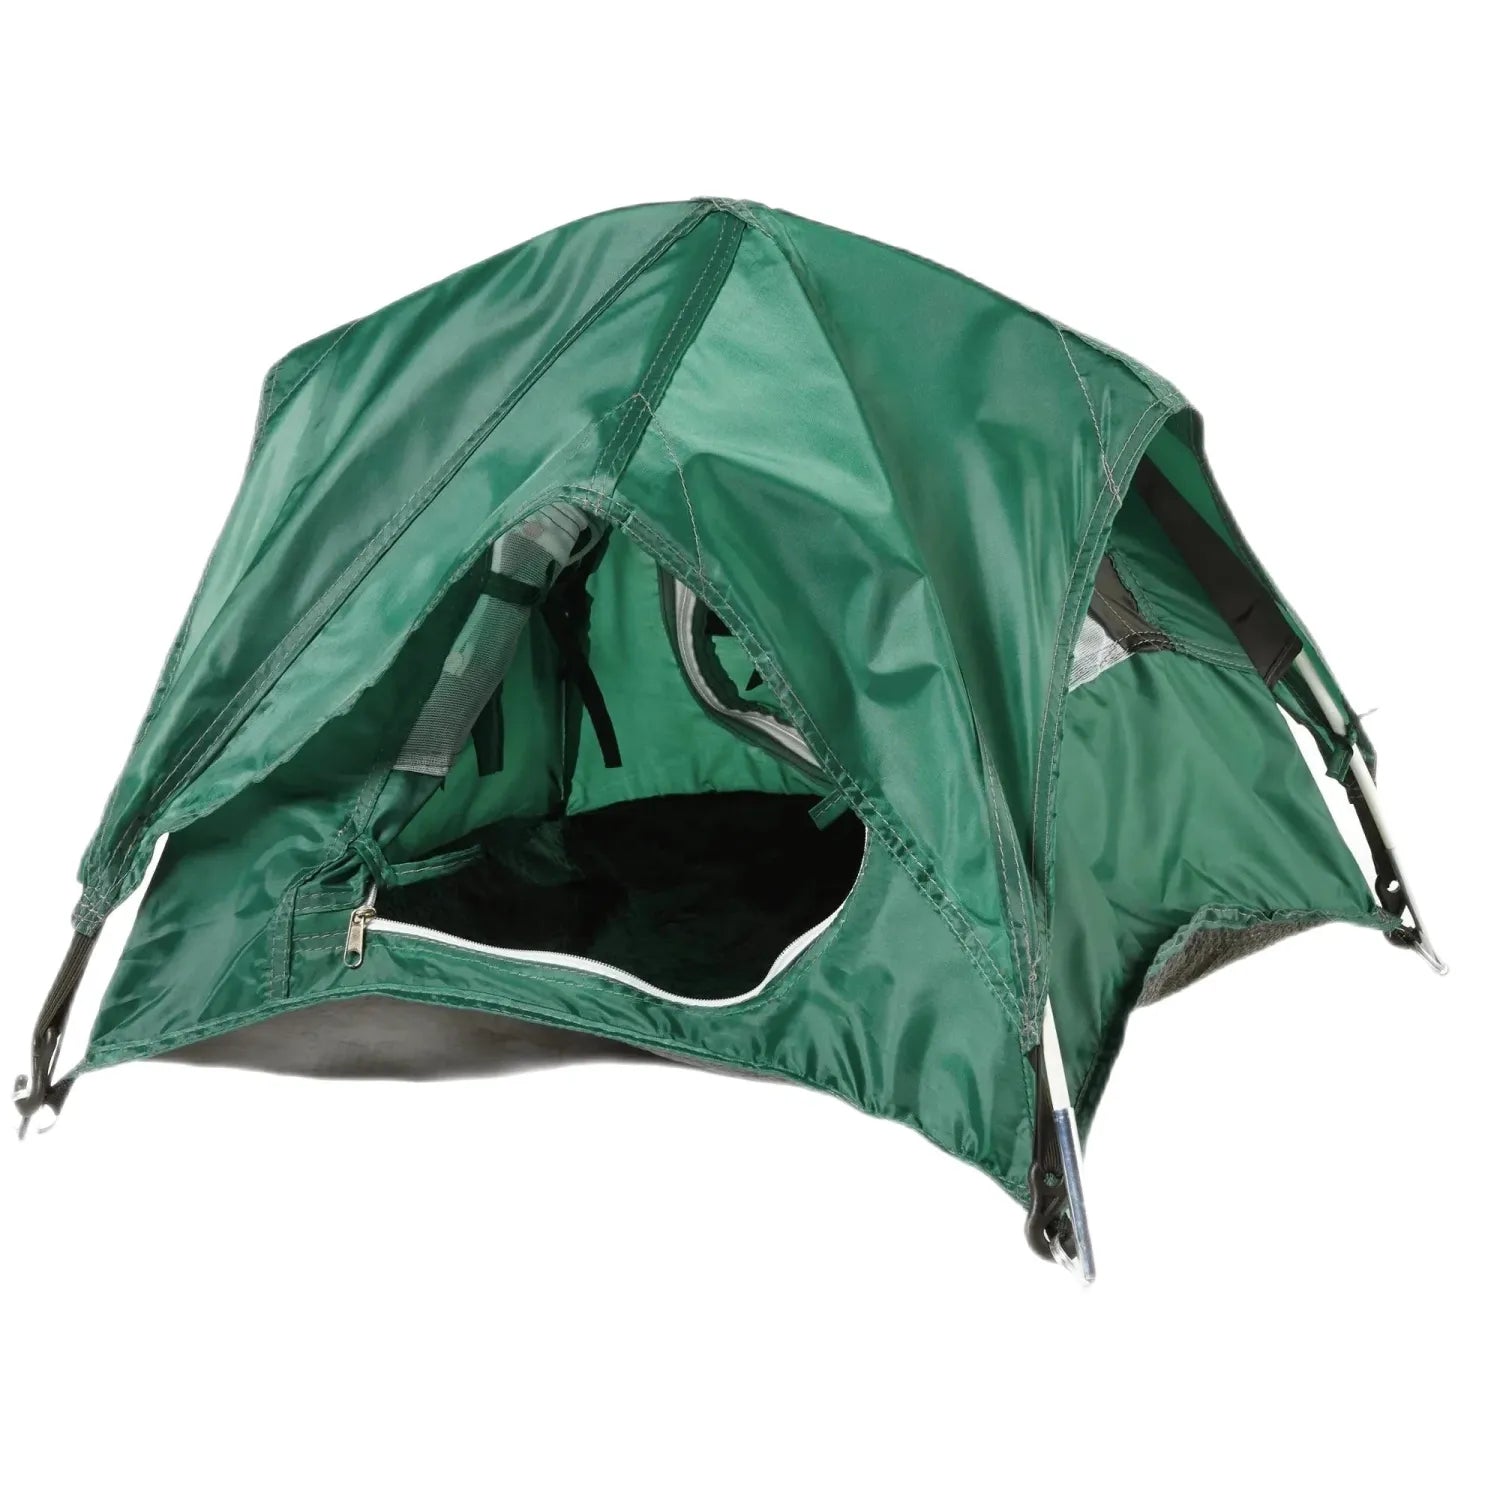 Matador Tiny Tent shown in the Green color option.